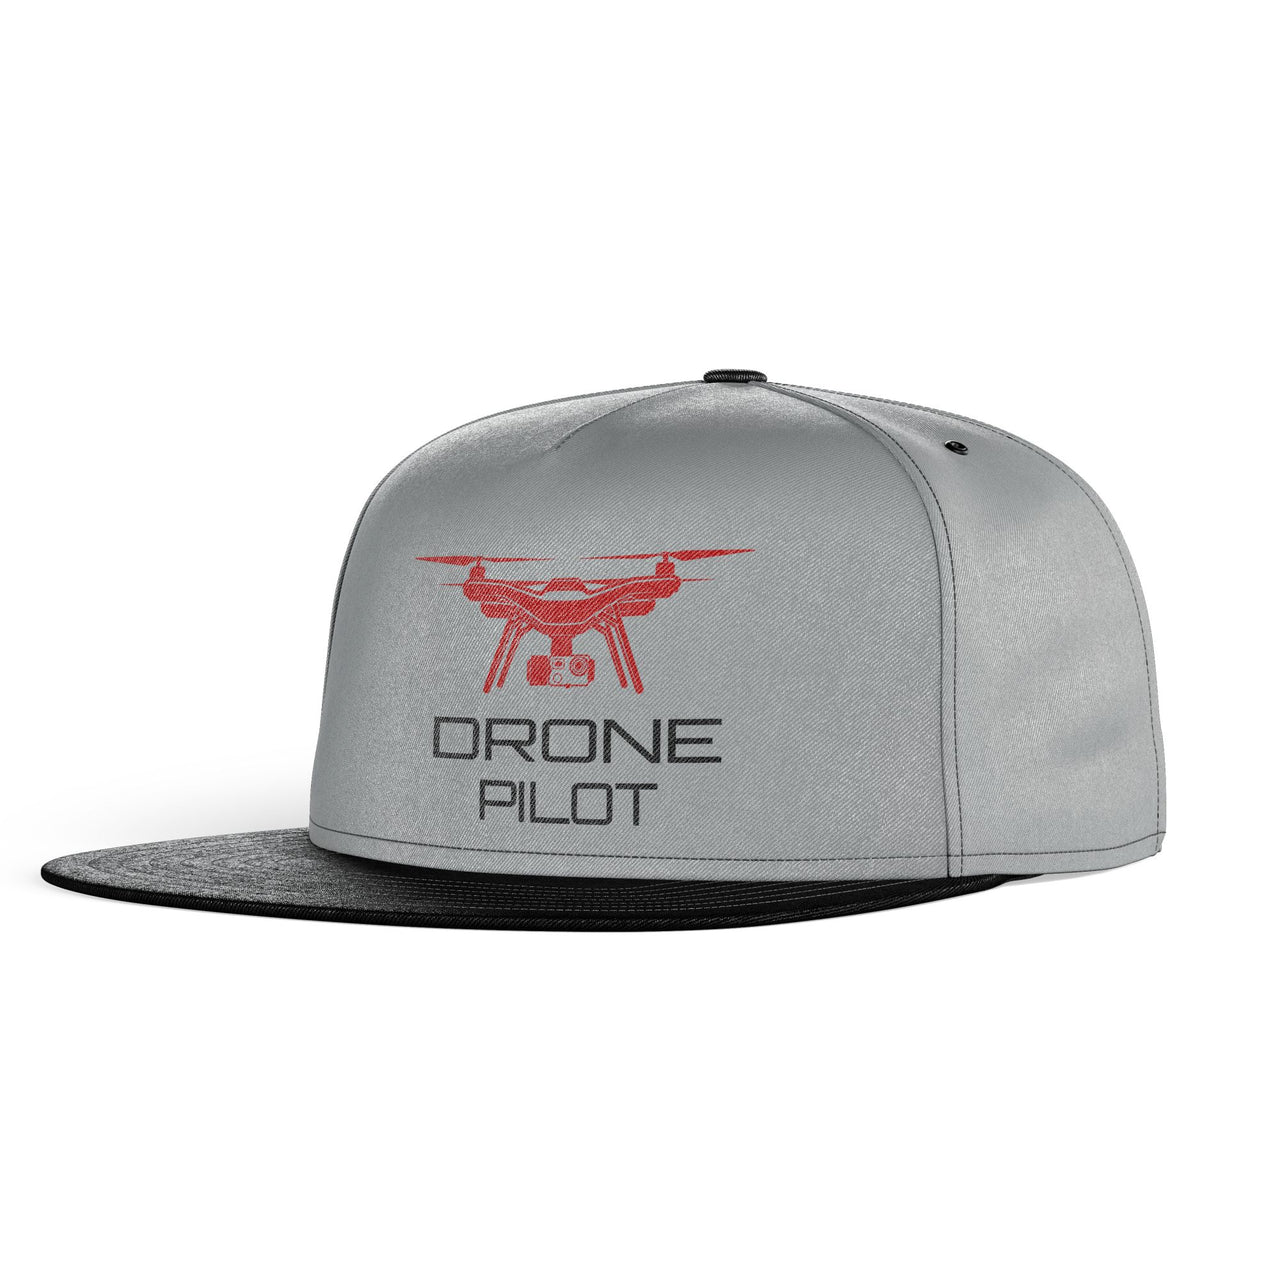 Drone Pilot Designed Snapback Caps & Hats